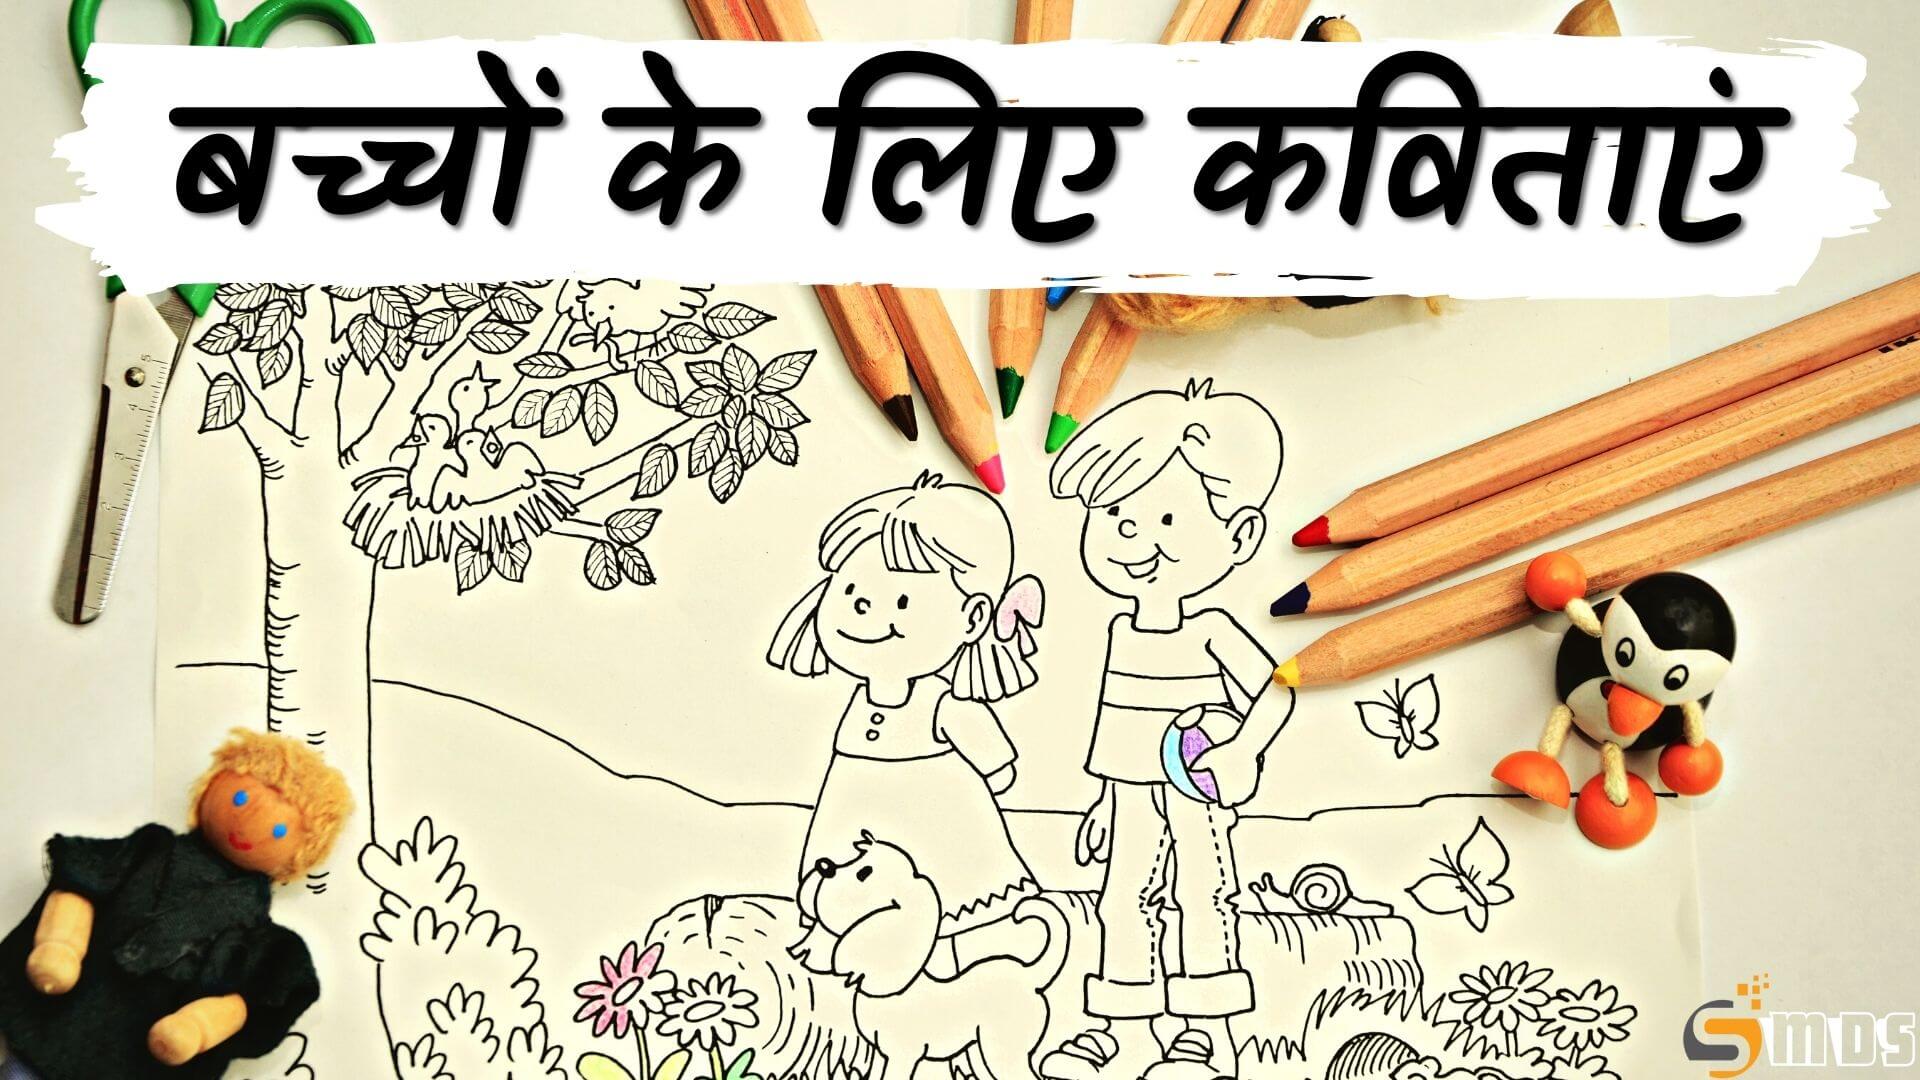 Short Hindi Poem, Hindi Poem for Class 1 Kids, Hindi Poem, Poem in Hindi for Kids, हिंदी कविता, बच्चों के लिए हिंदी कविताएं, Hindi Poem for Kids